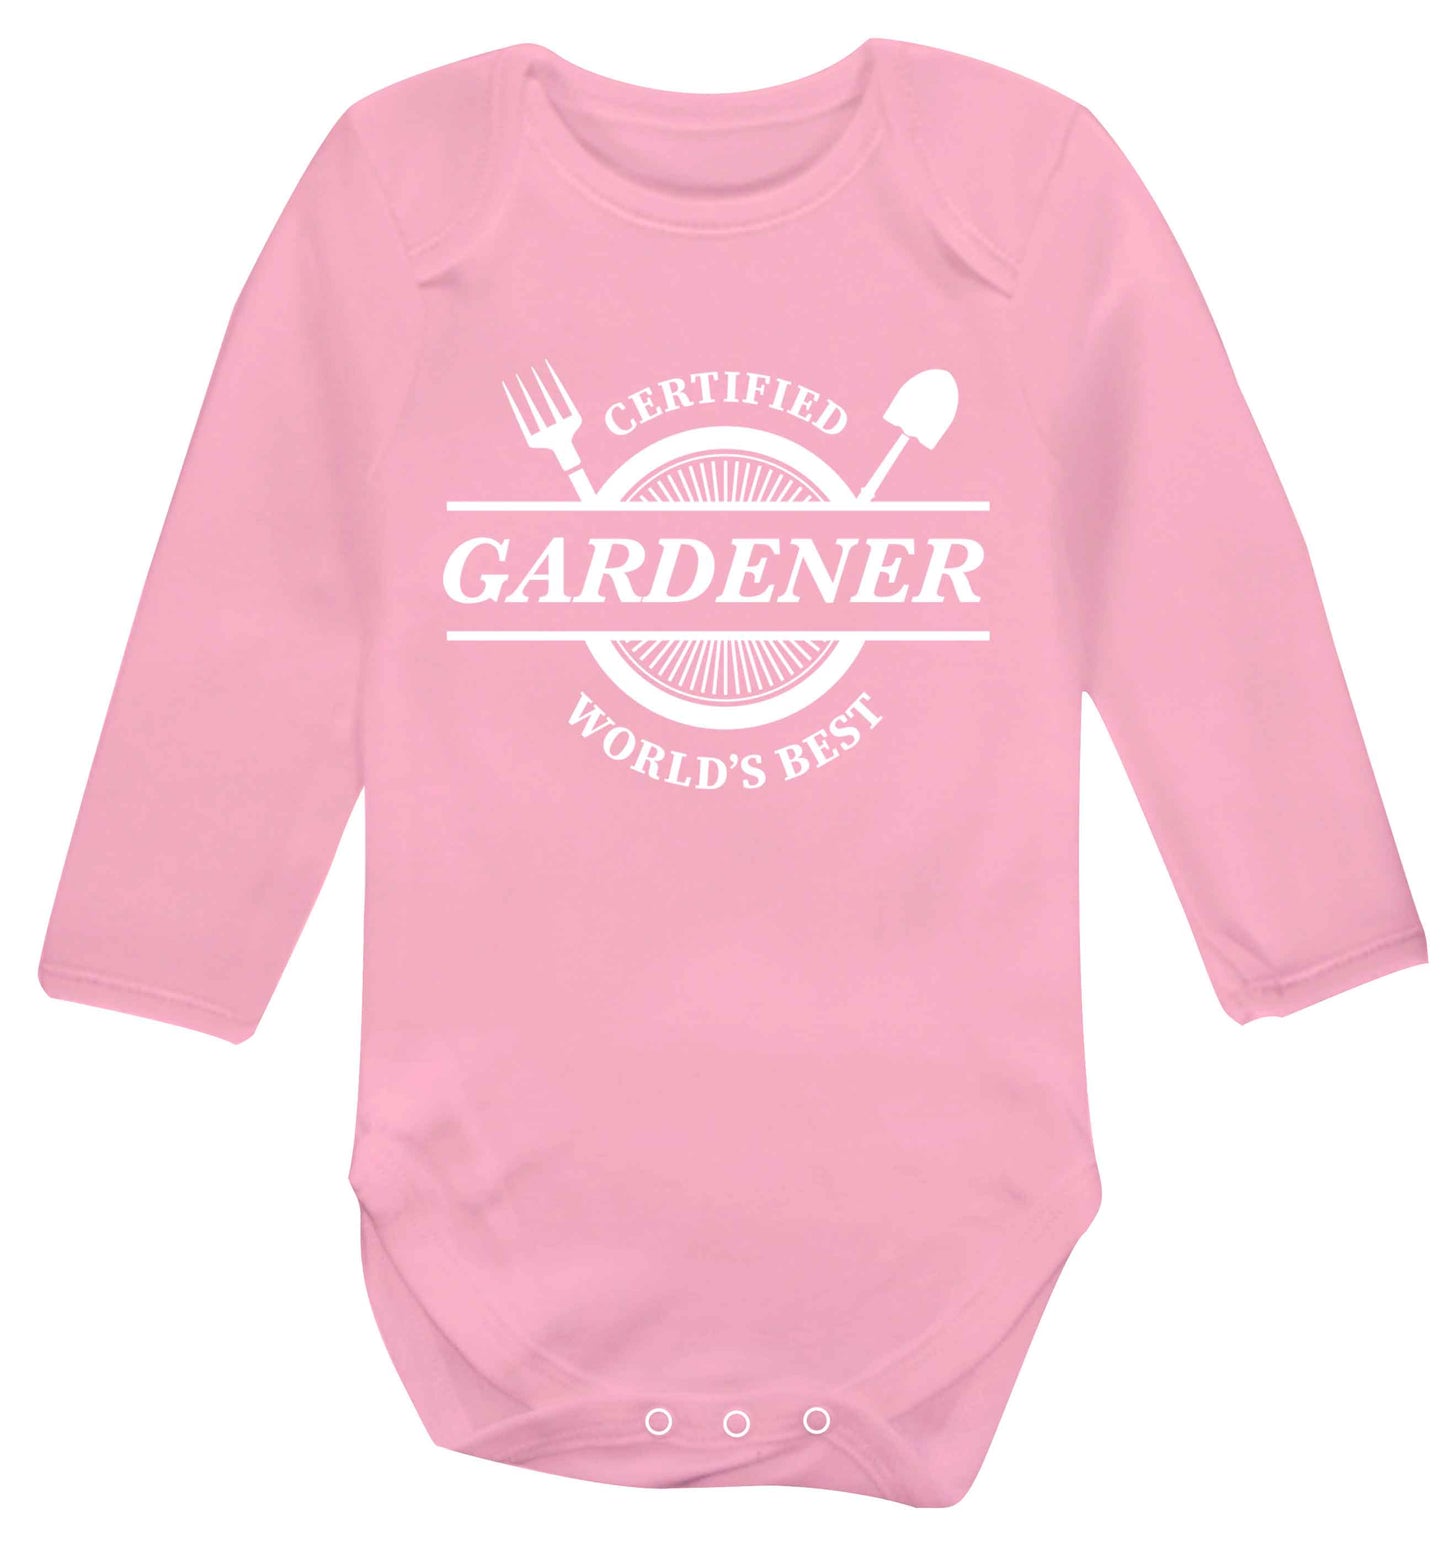 Certified gardener worlds best Baby Vest long sleeved pale pink 6-12 months